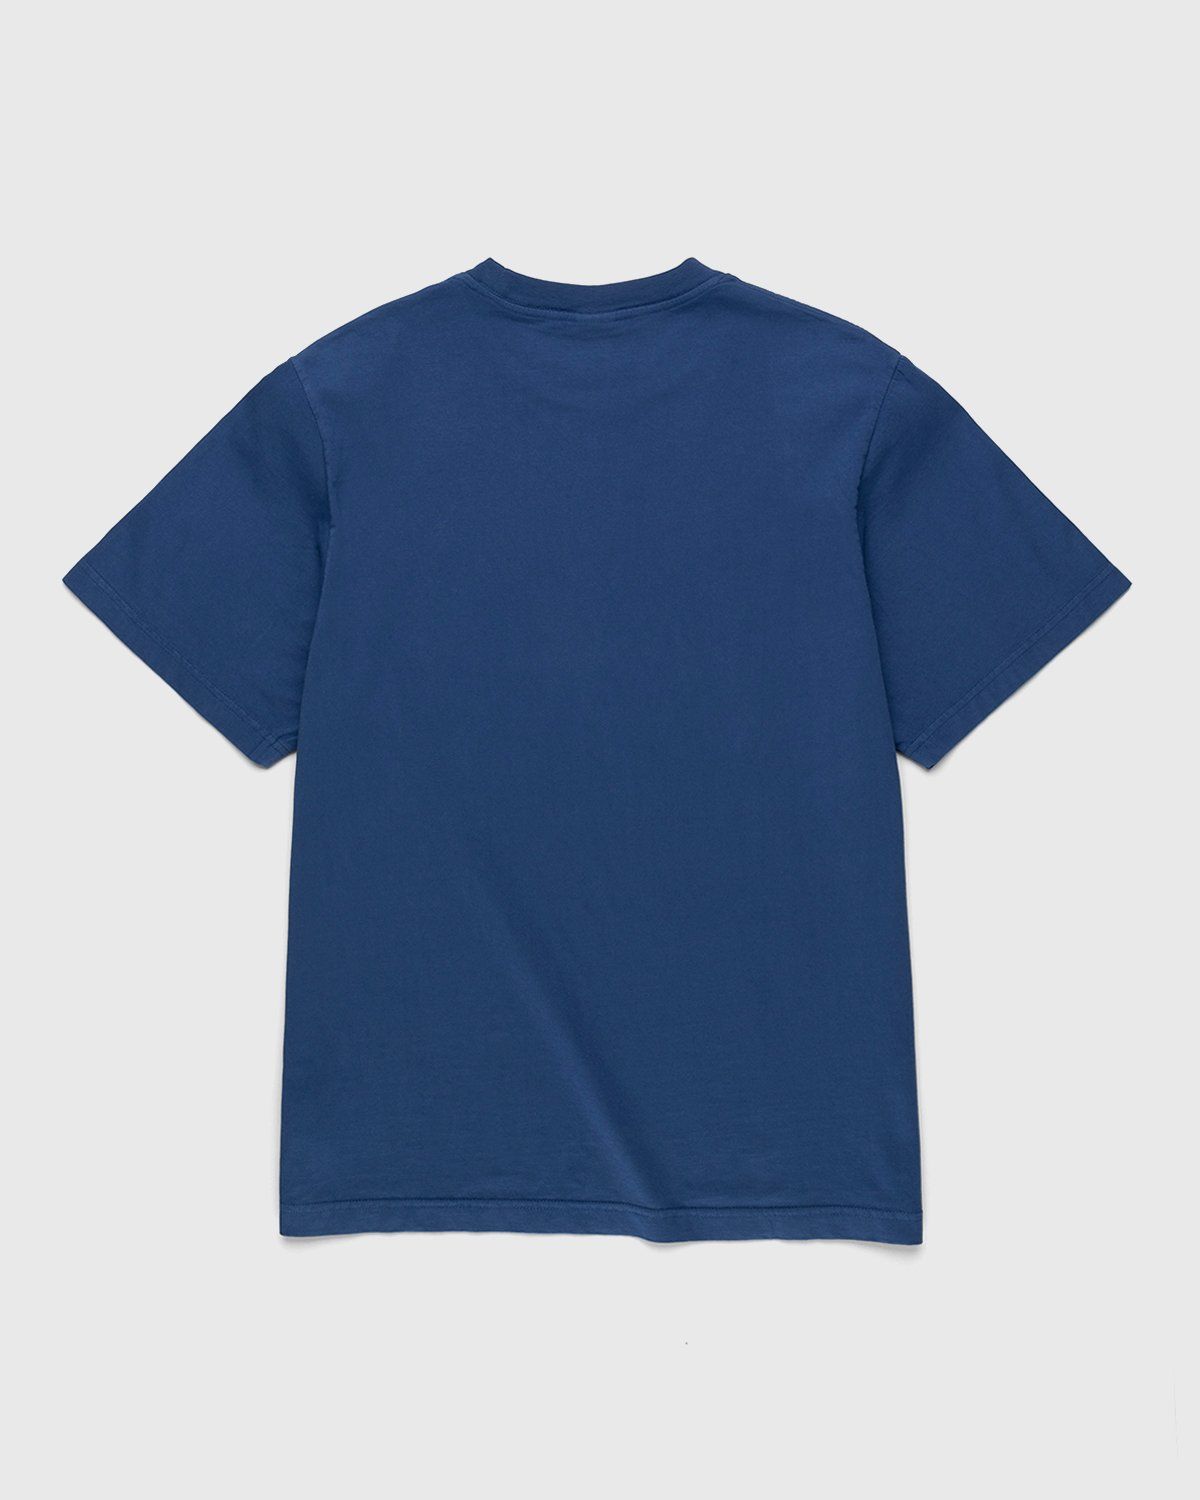 Noon Goons – My Block Tshirt Navy - Tops - Blue - Image 2